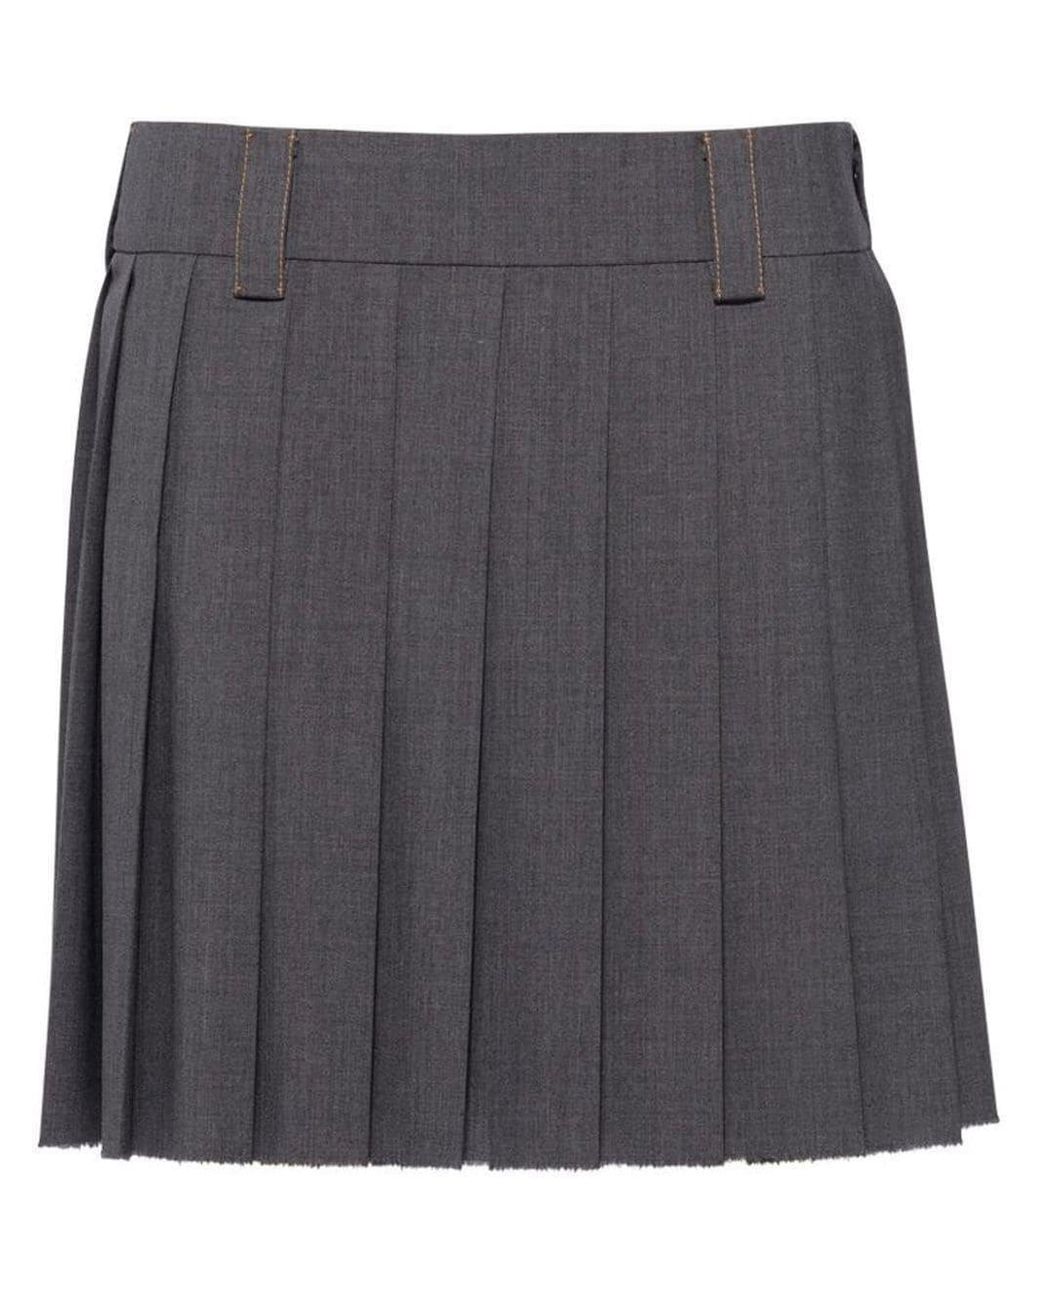 Miu Miu Virgin-wool Pleated Skirt in Gray | Lyst